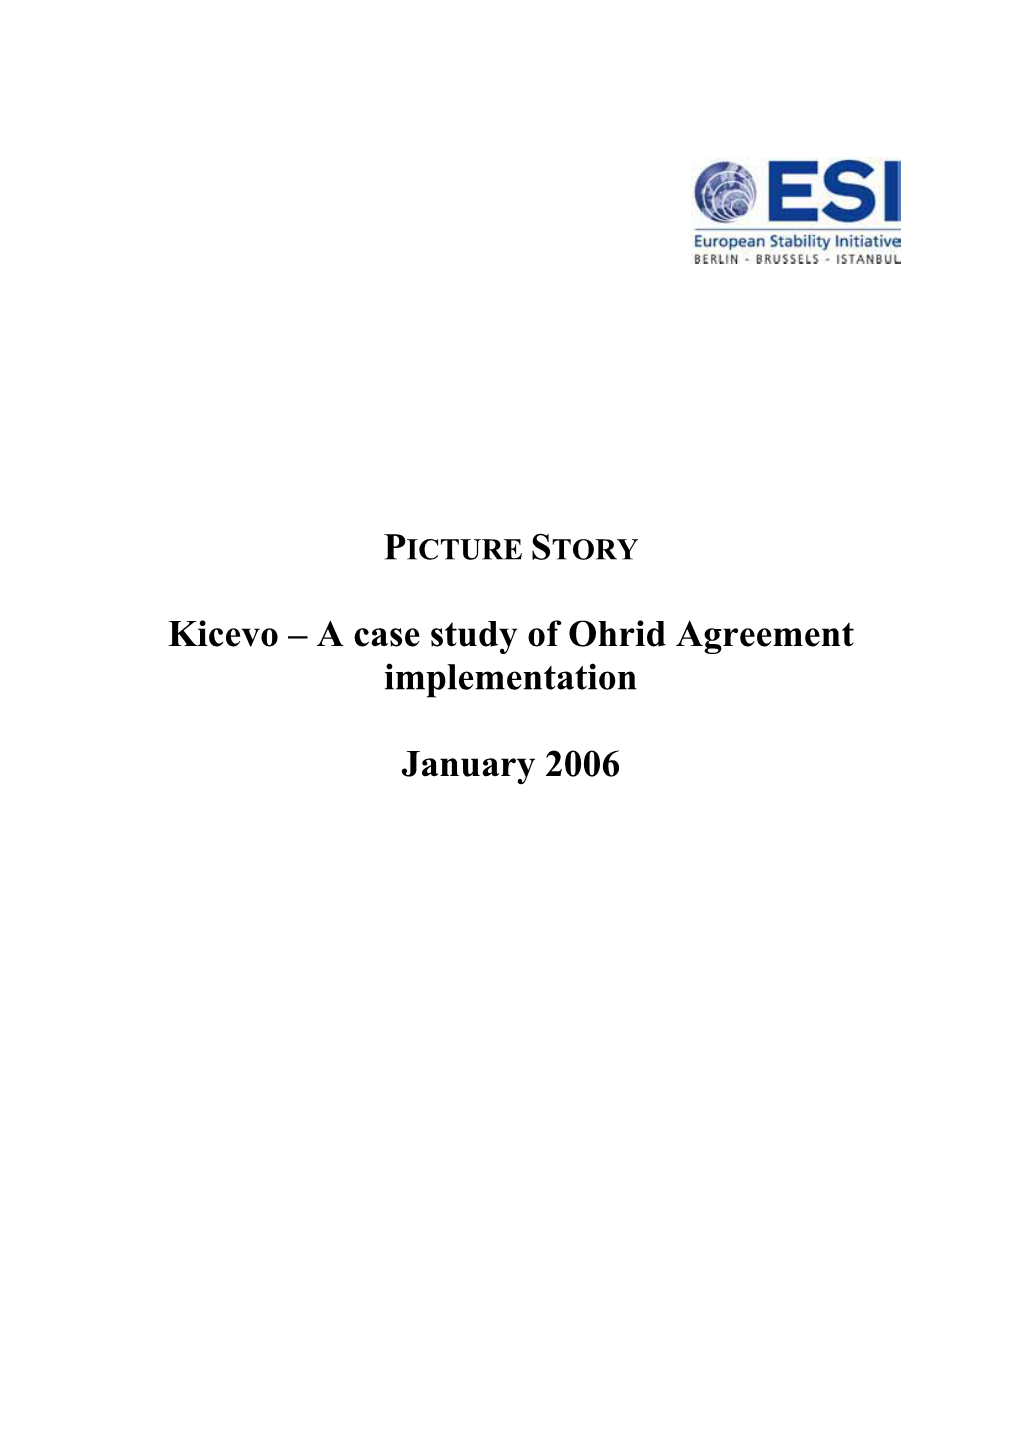 Kicevo – a Case Study of Ohrid Agreement Implementation